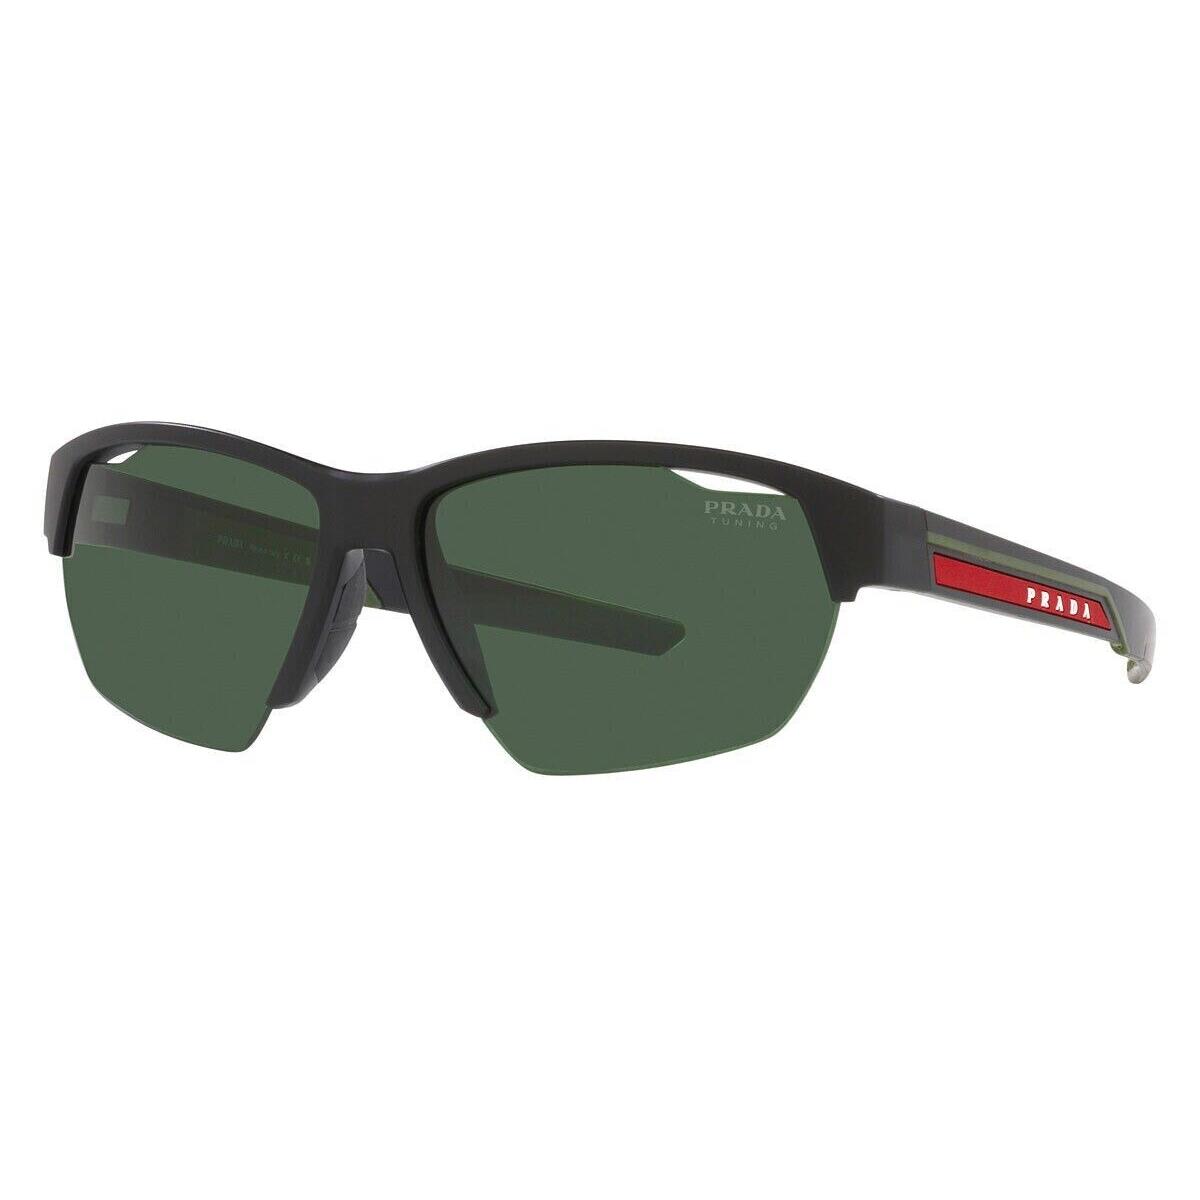 Prada PS03YS 18G06U 64 Sunglasses Matte Black Green Tuning Lens - Frame: Matte Black / Green Tuning, Lens: Green Tuning